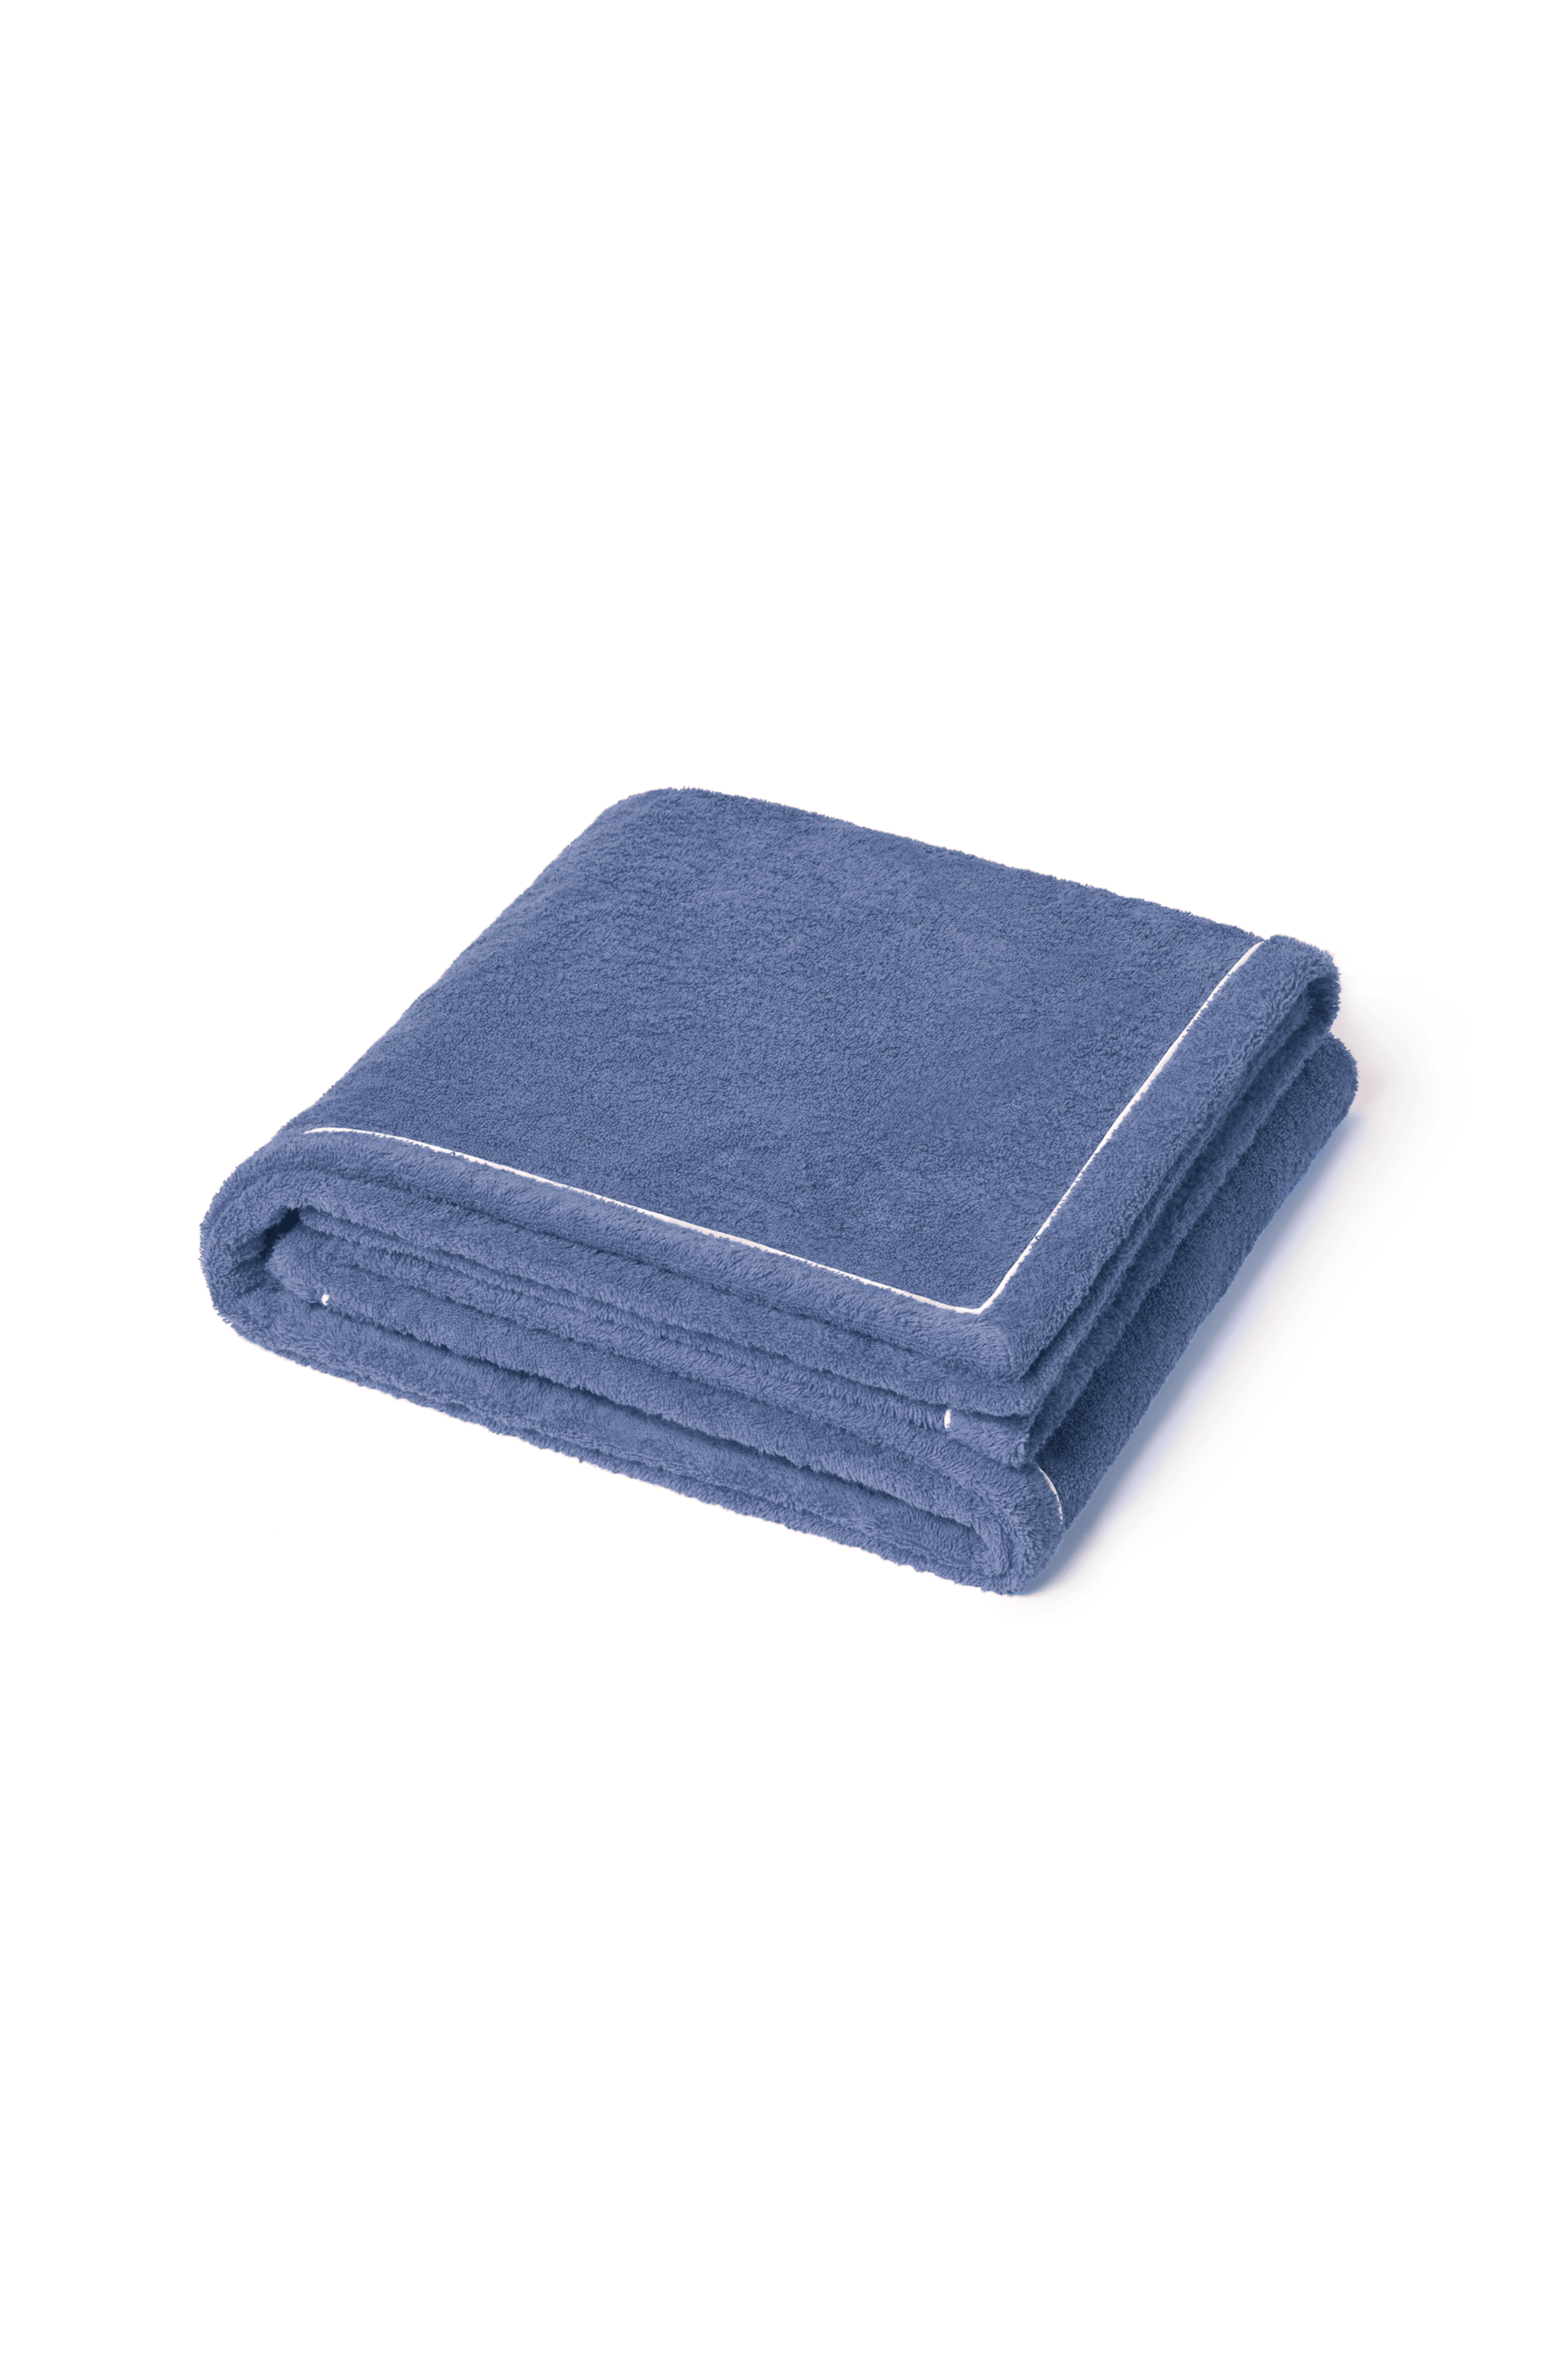 Indigo deckchair towel 